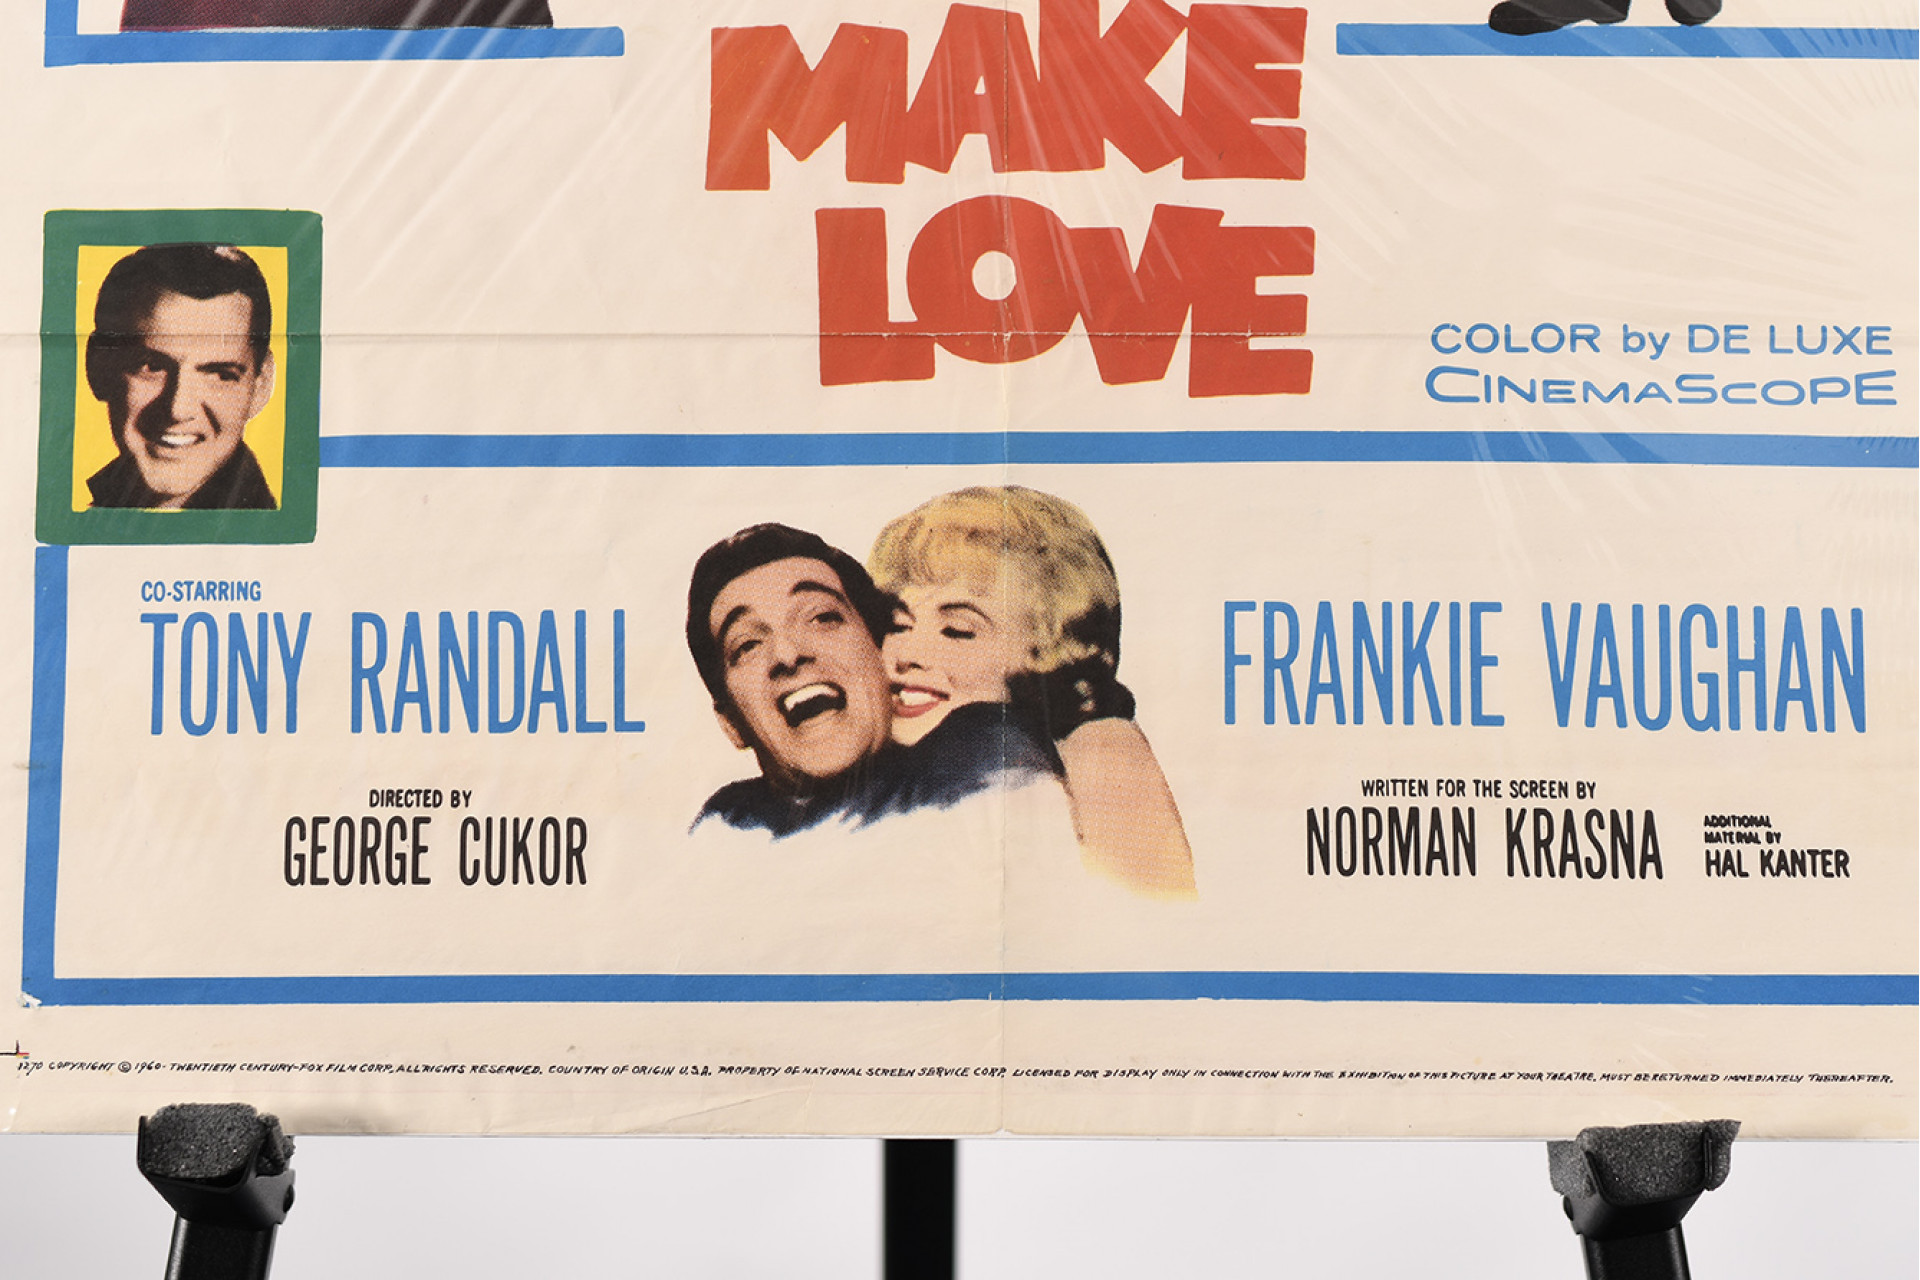 Original Marilyn Monroe Cinema Poster